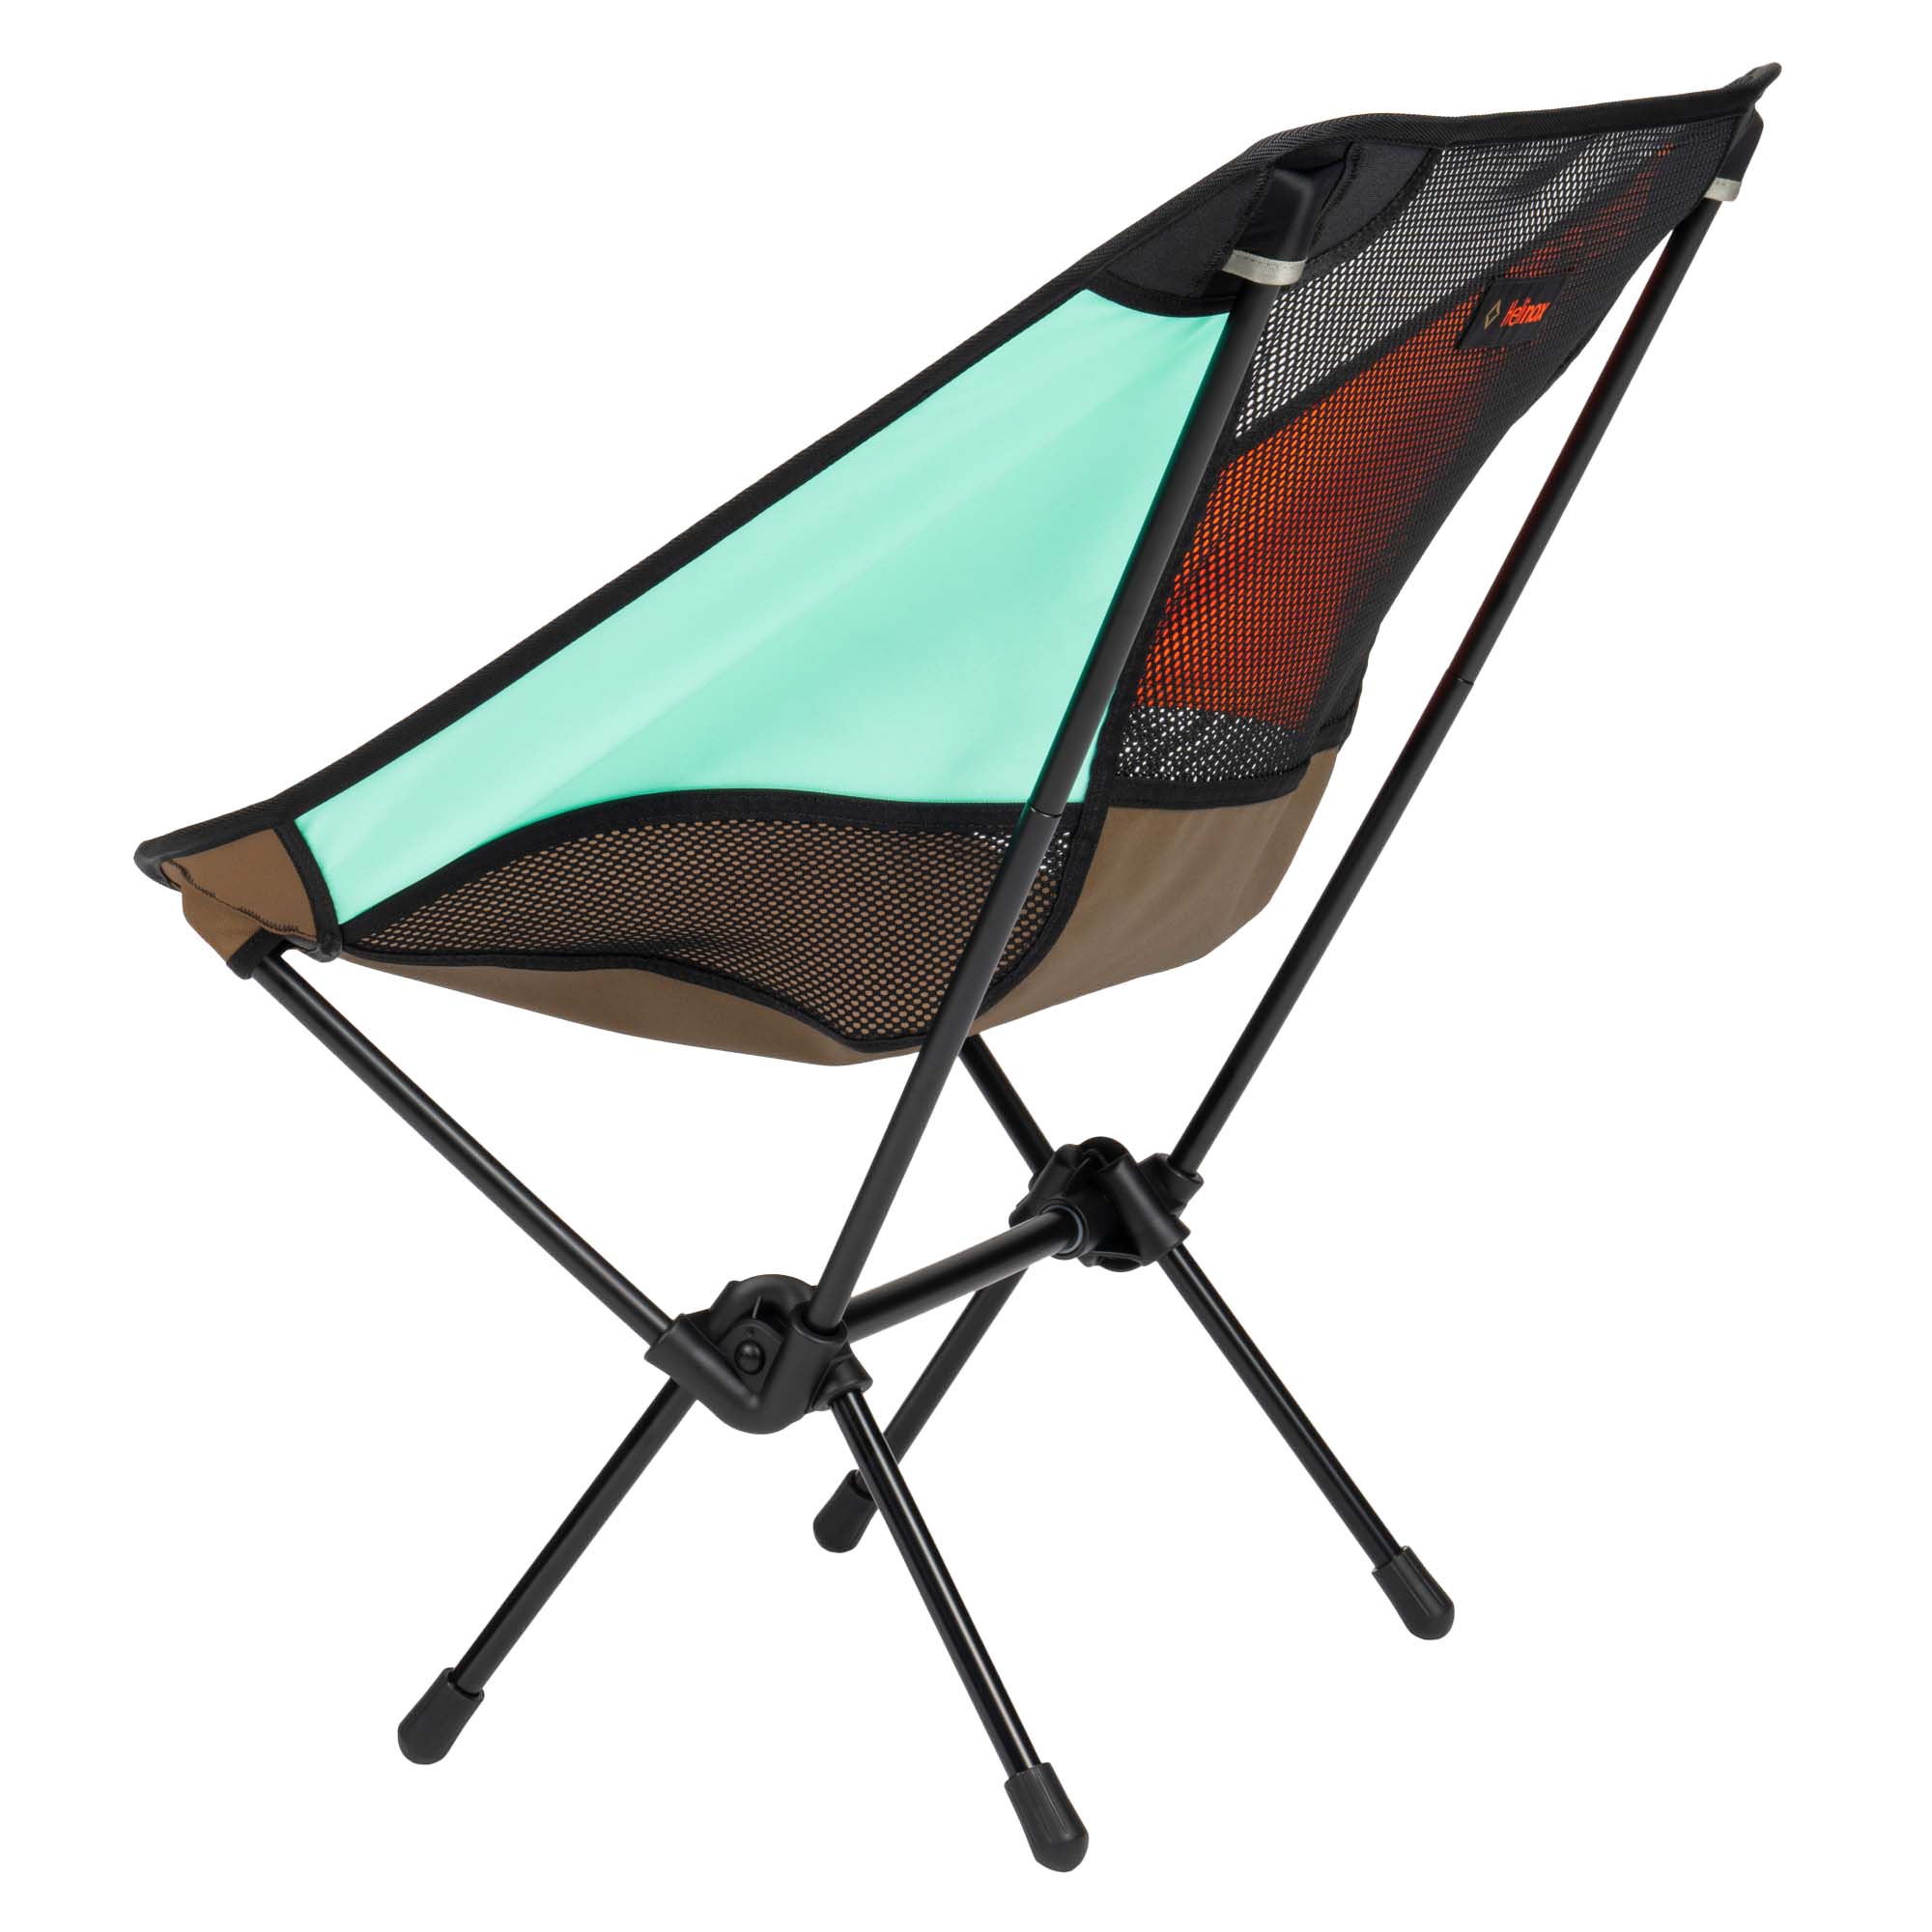 Helinox Chair One Lightweight Compact Camp Chair